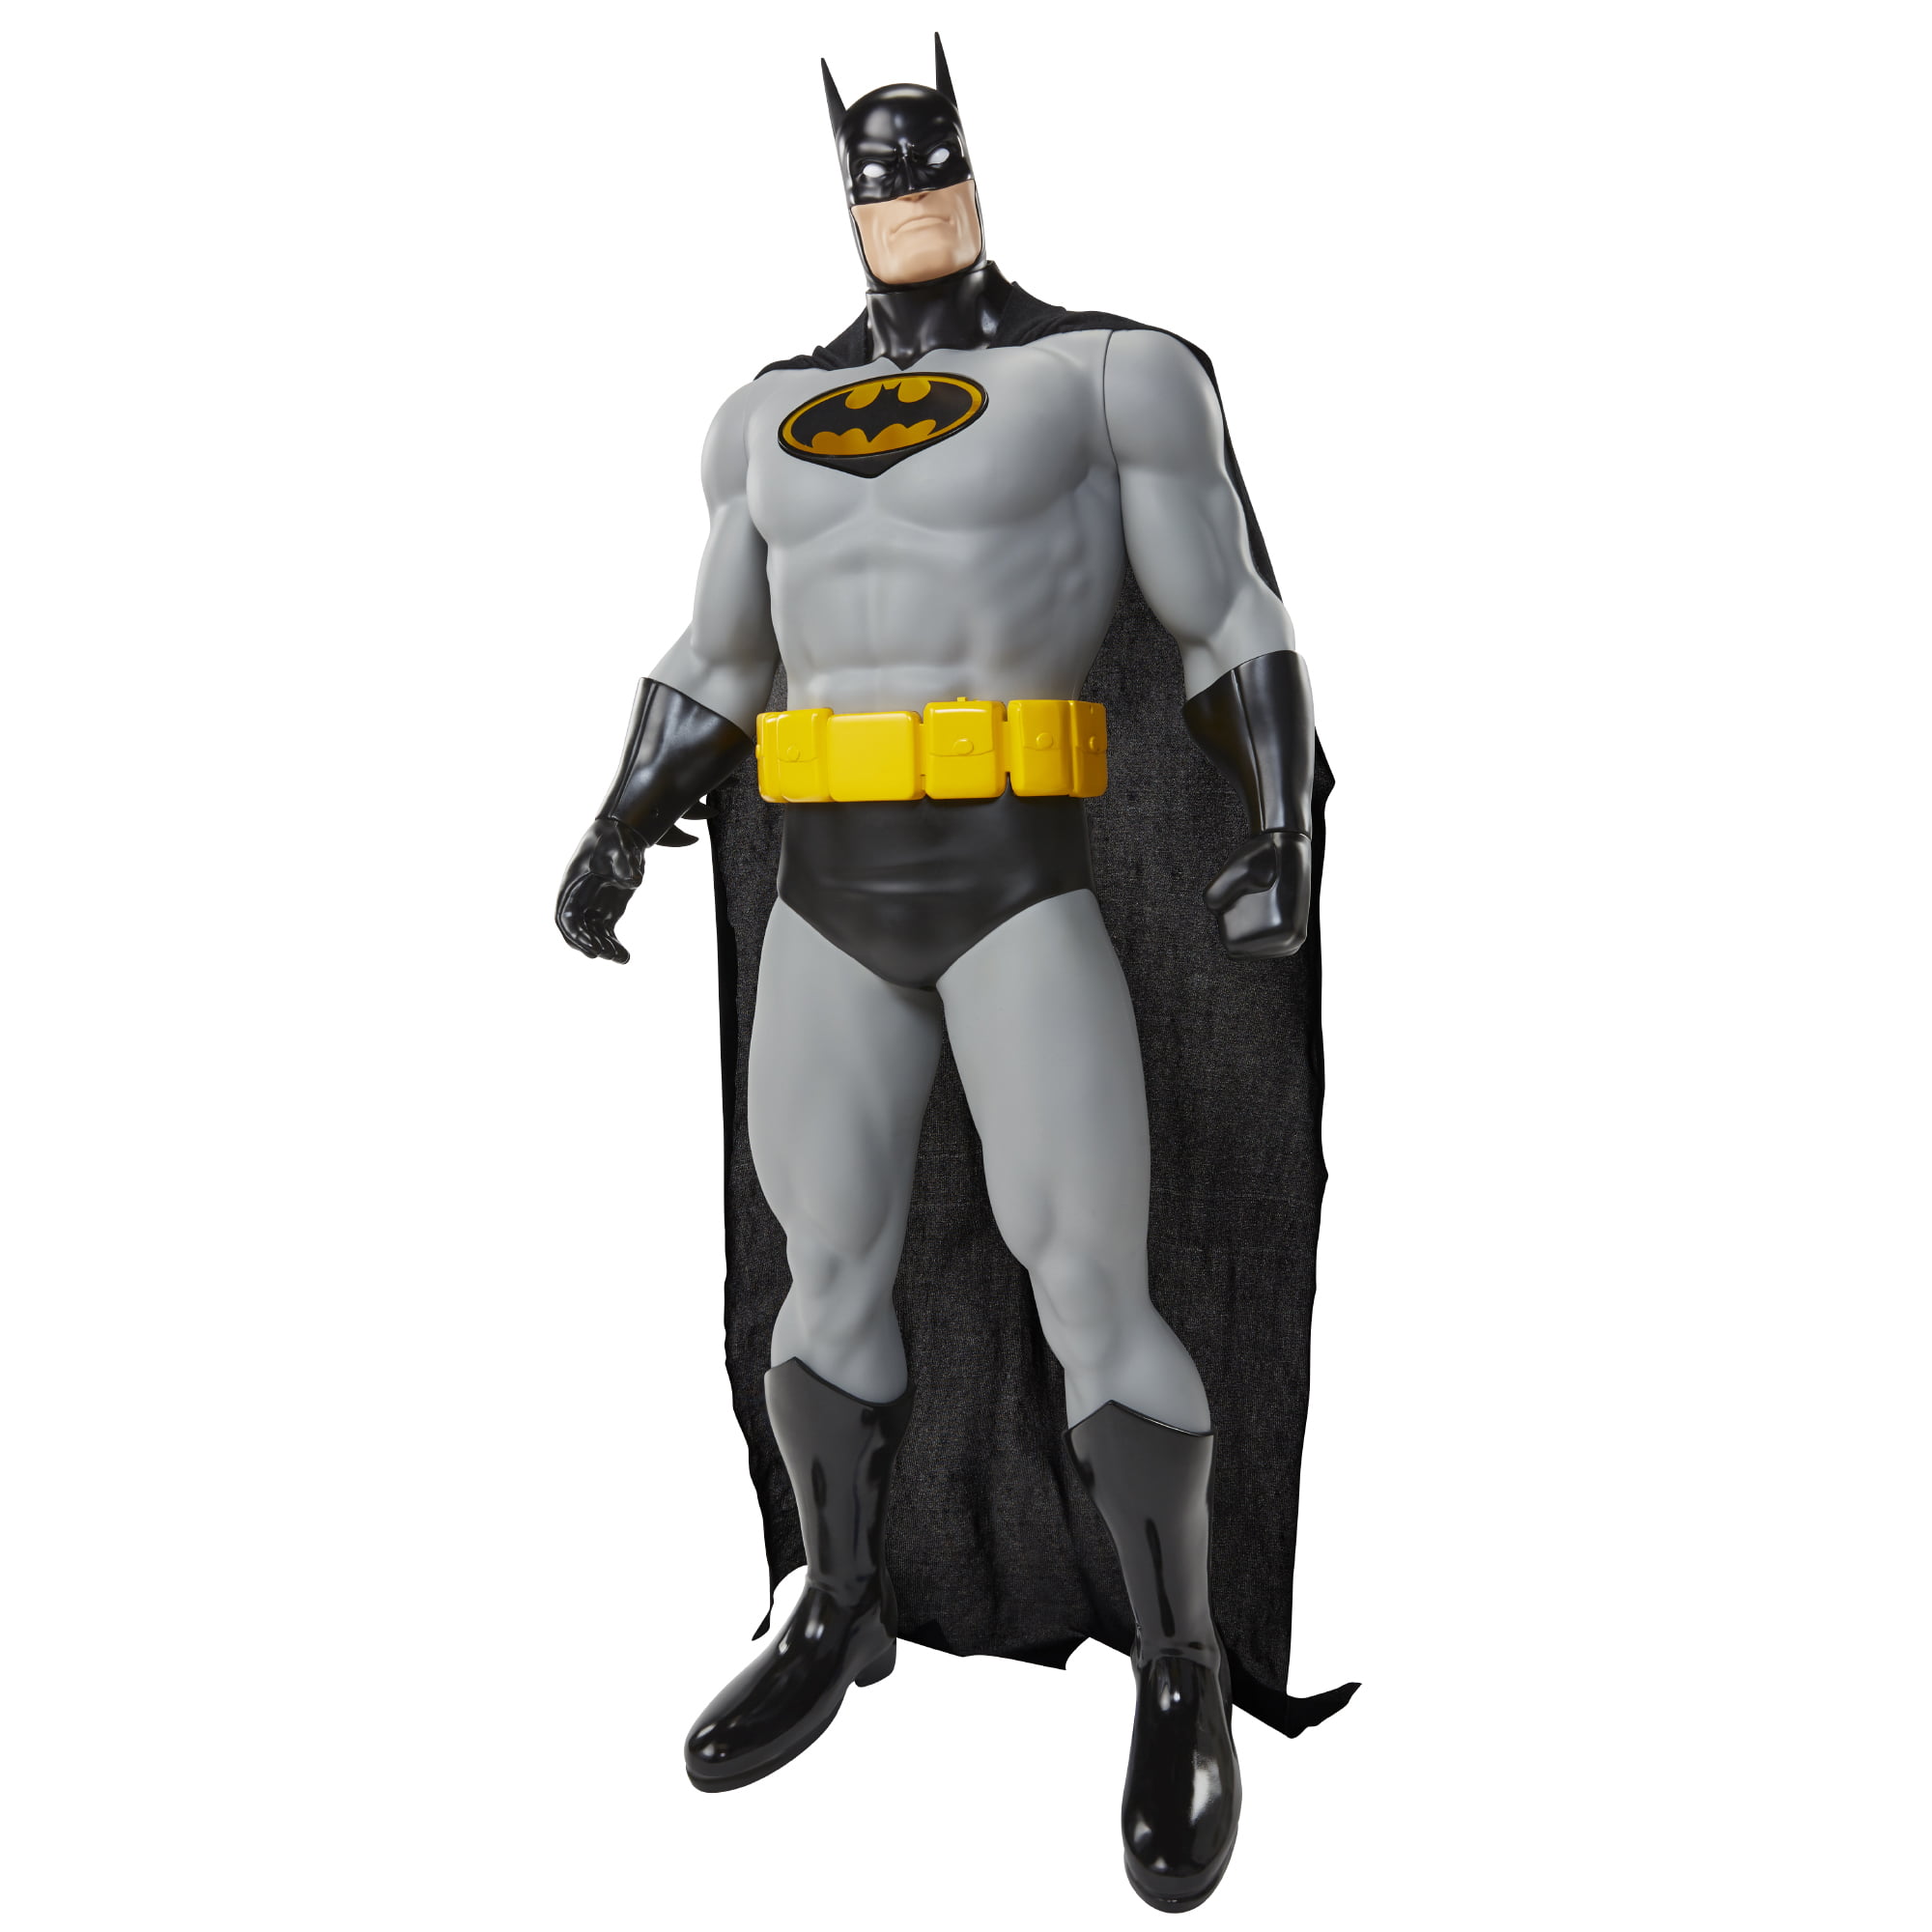 3ft batman figure